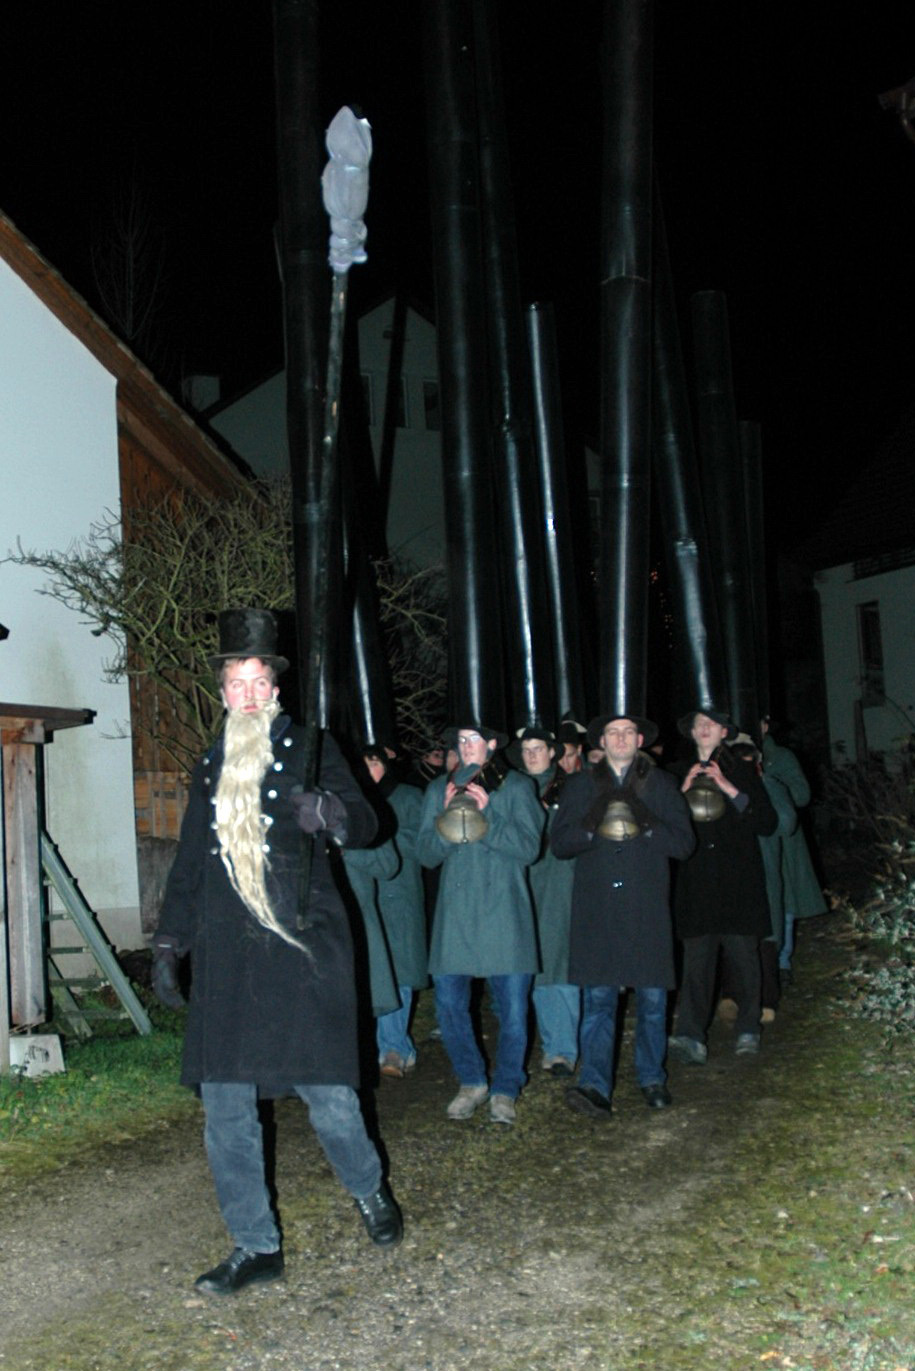 Il «Bäsemaa» maina il cortegi dals «Nüünichlingler». El porta cun sai in lung fist vi dal qual penda in sdratsch da fulin, 2004 © Beat Thommen